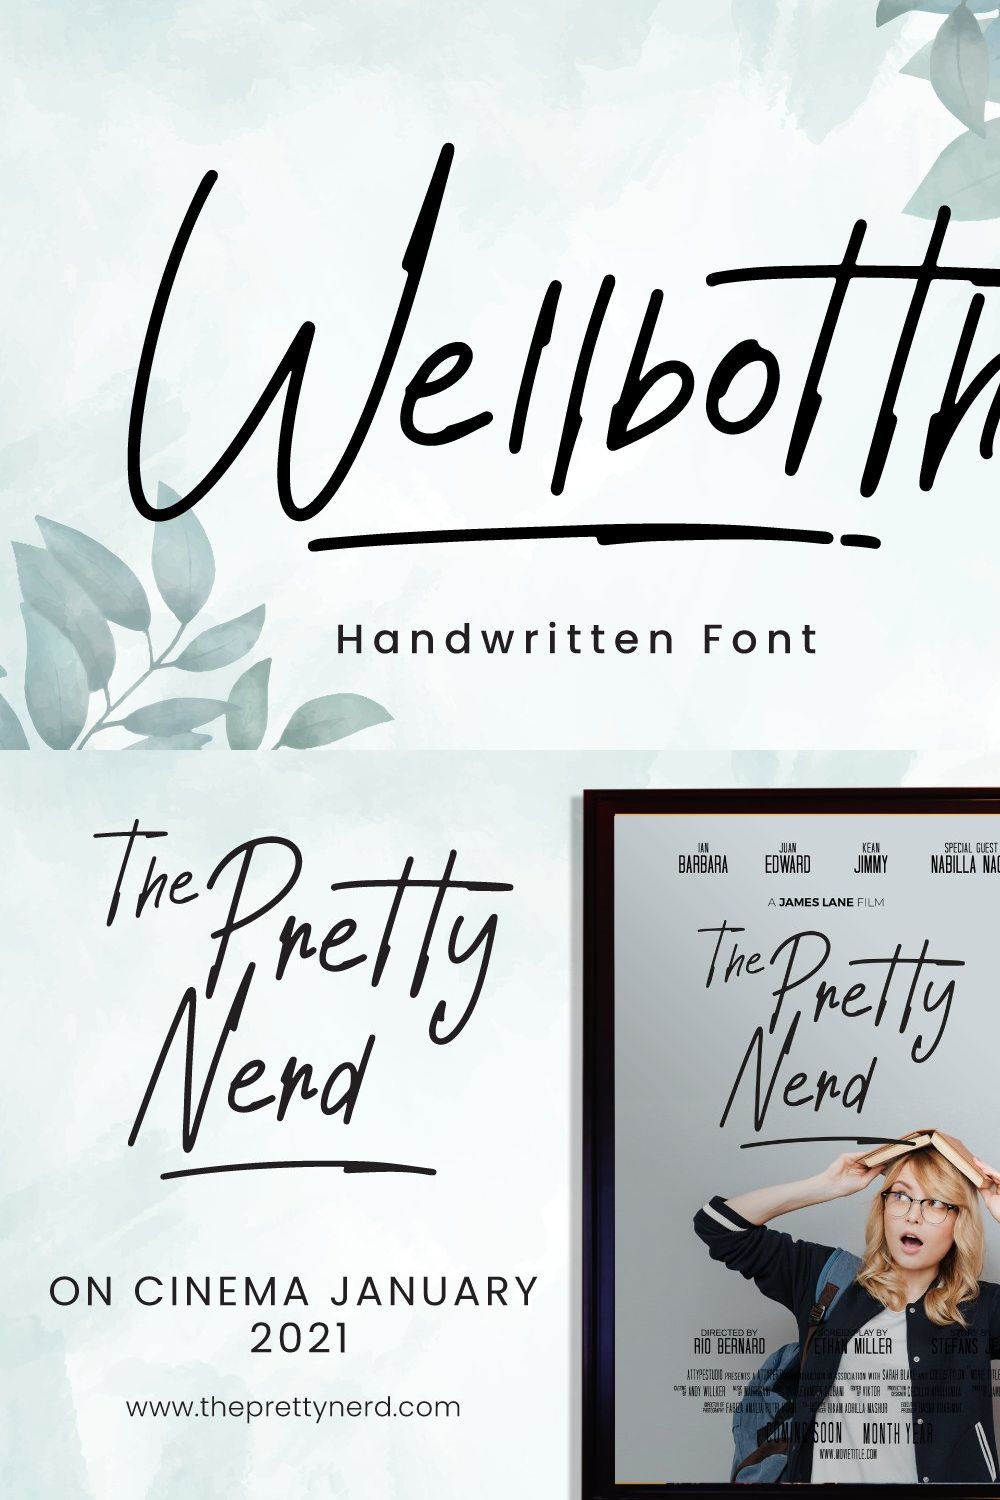 Wellbotth - Handwritten Font pinterest preview image.